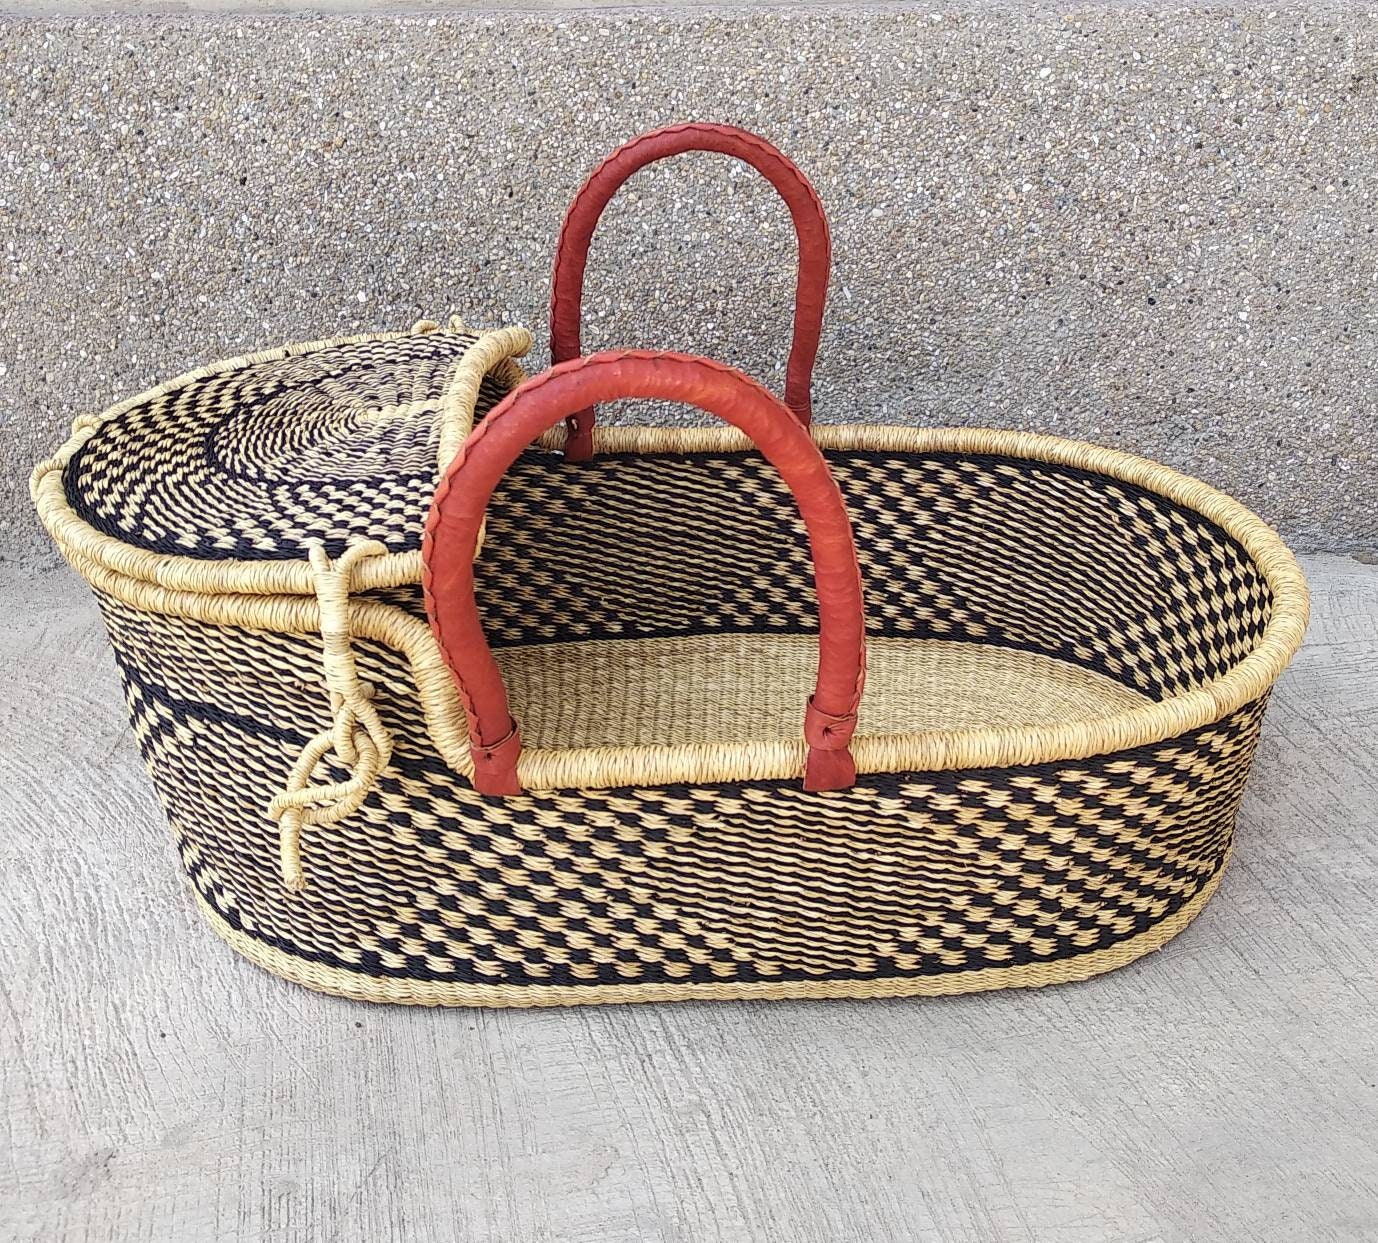 Moses basket for baby | platform bed | Baby shower gift | Baby bed | African moses basket | Gift for mom |Nursery decor | Baby gift|Bassinet - AfricanheritageGH